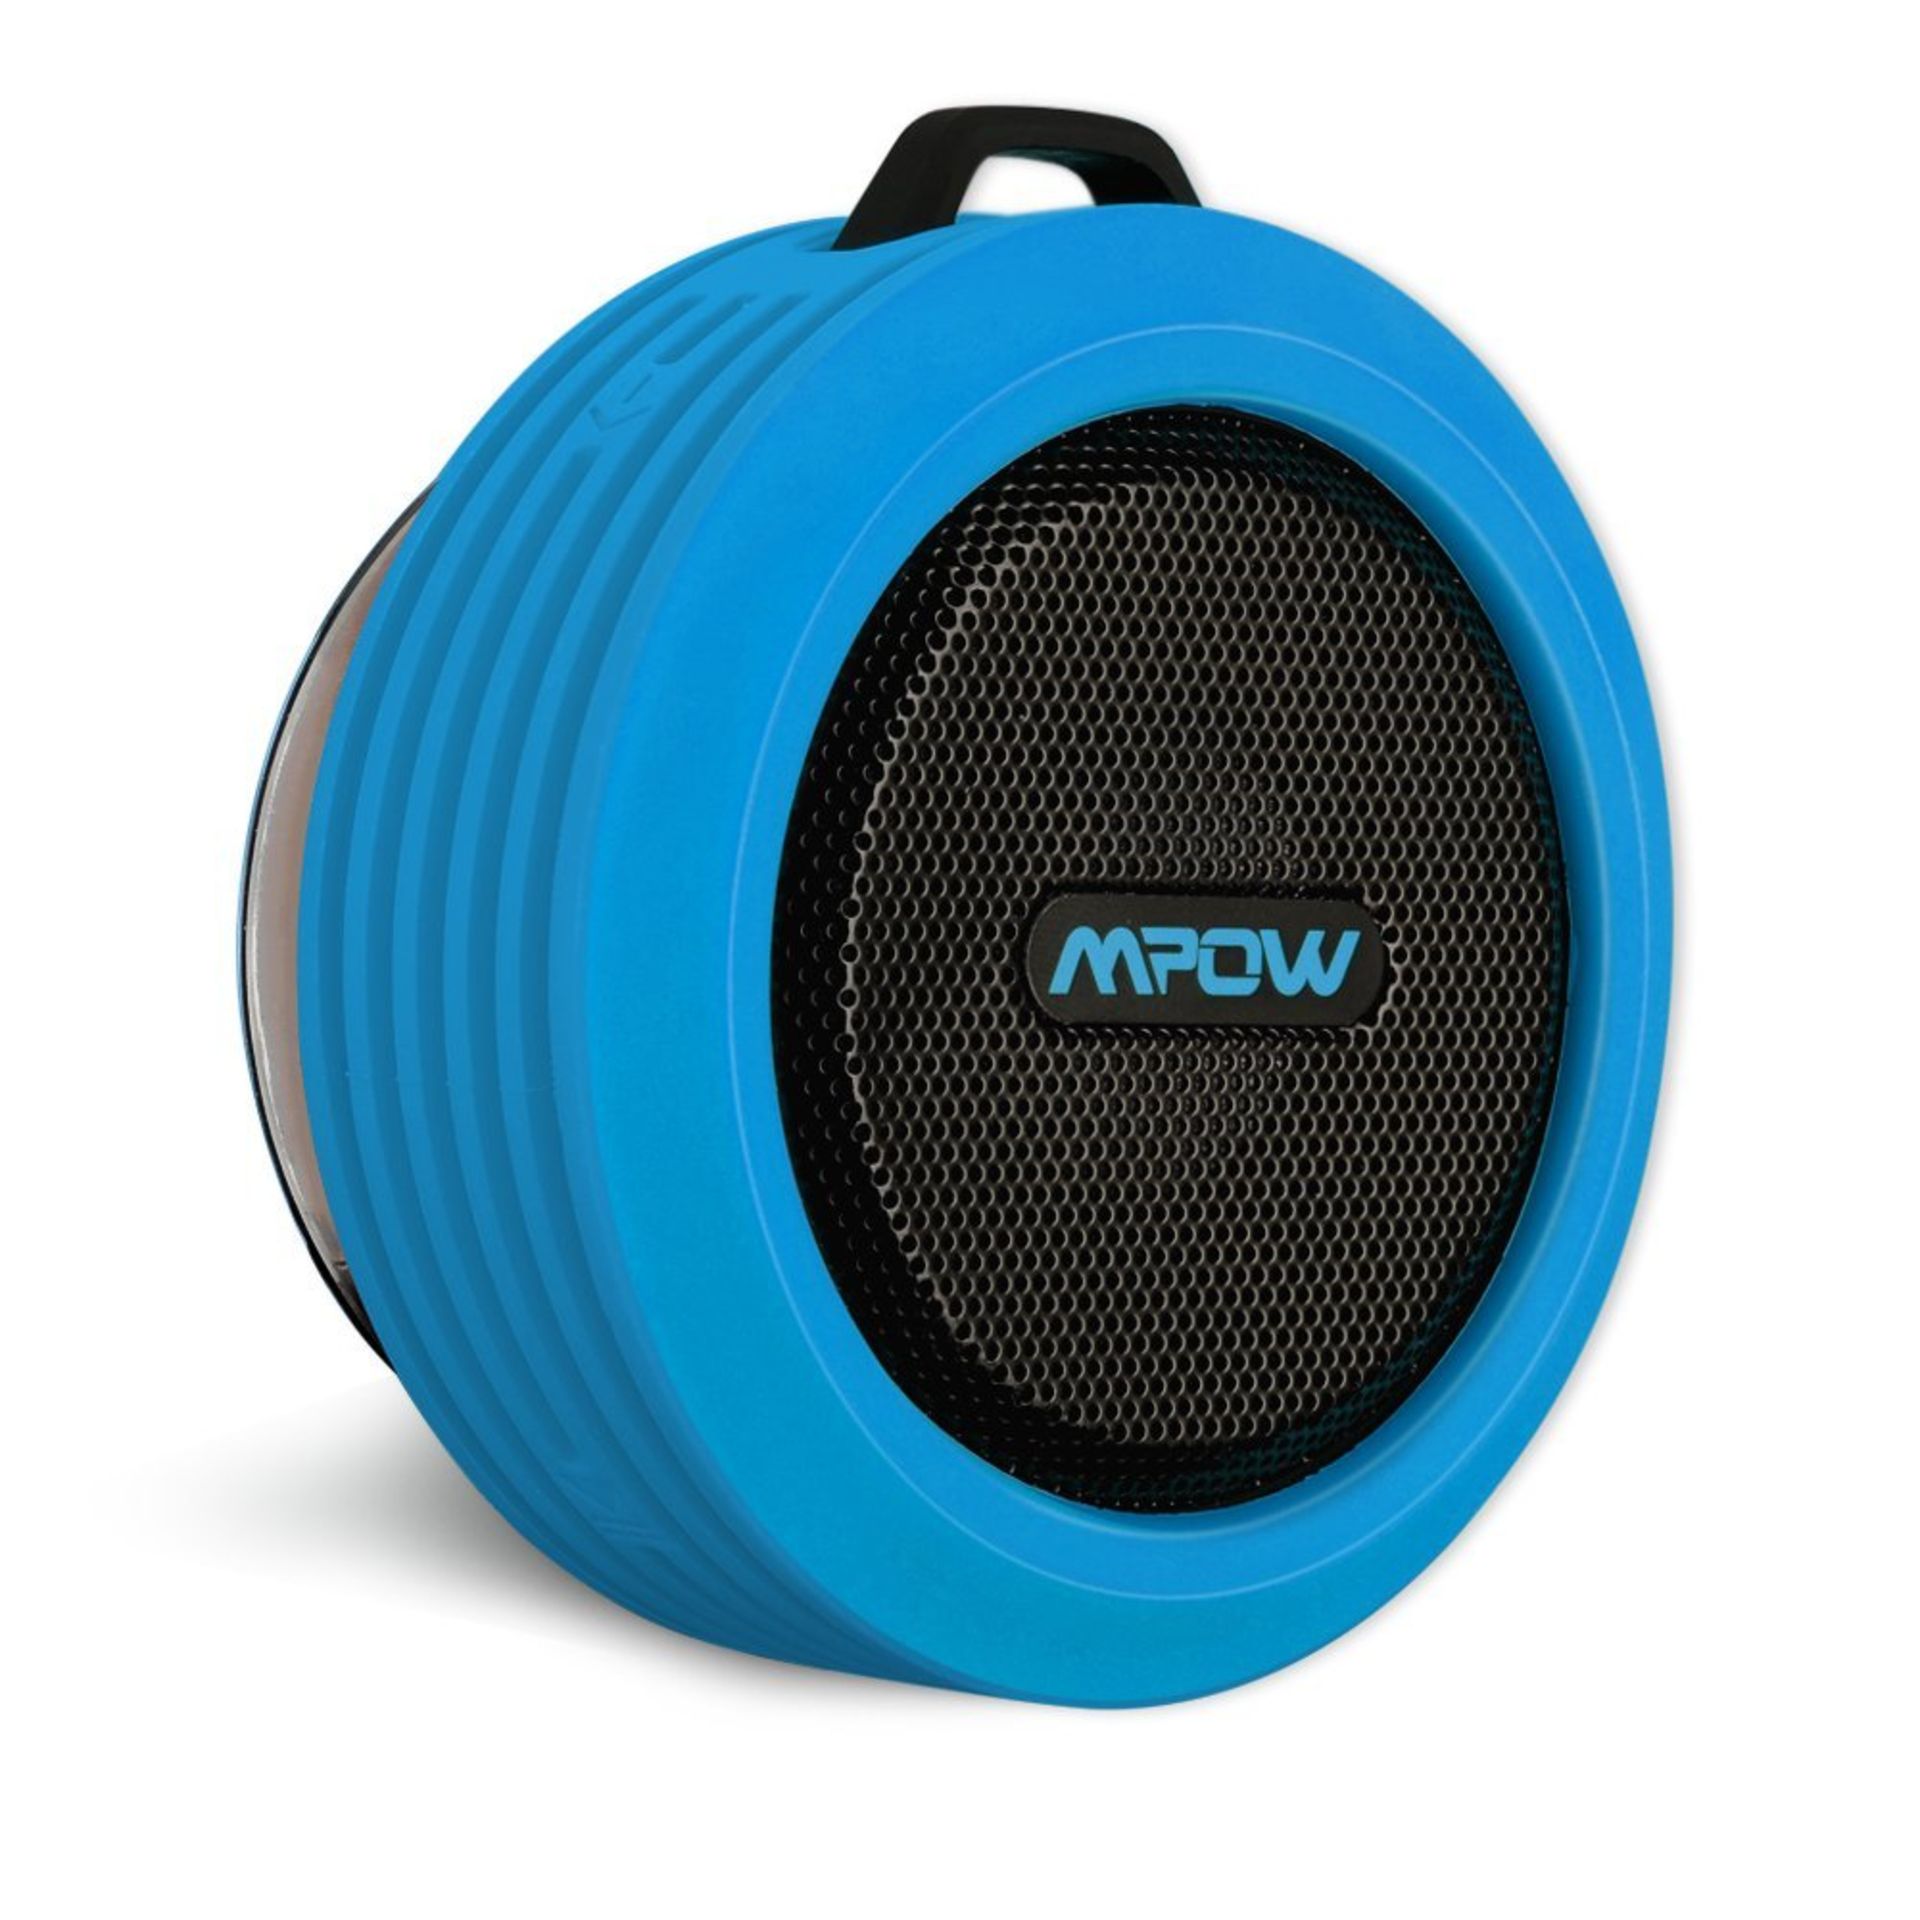 V Grade A Wireless Speaker - 10000 mAh battery - Waterproof - Micro USB Included - Amazon Price £